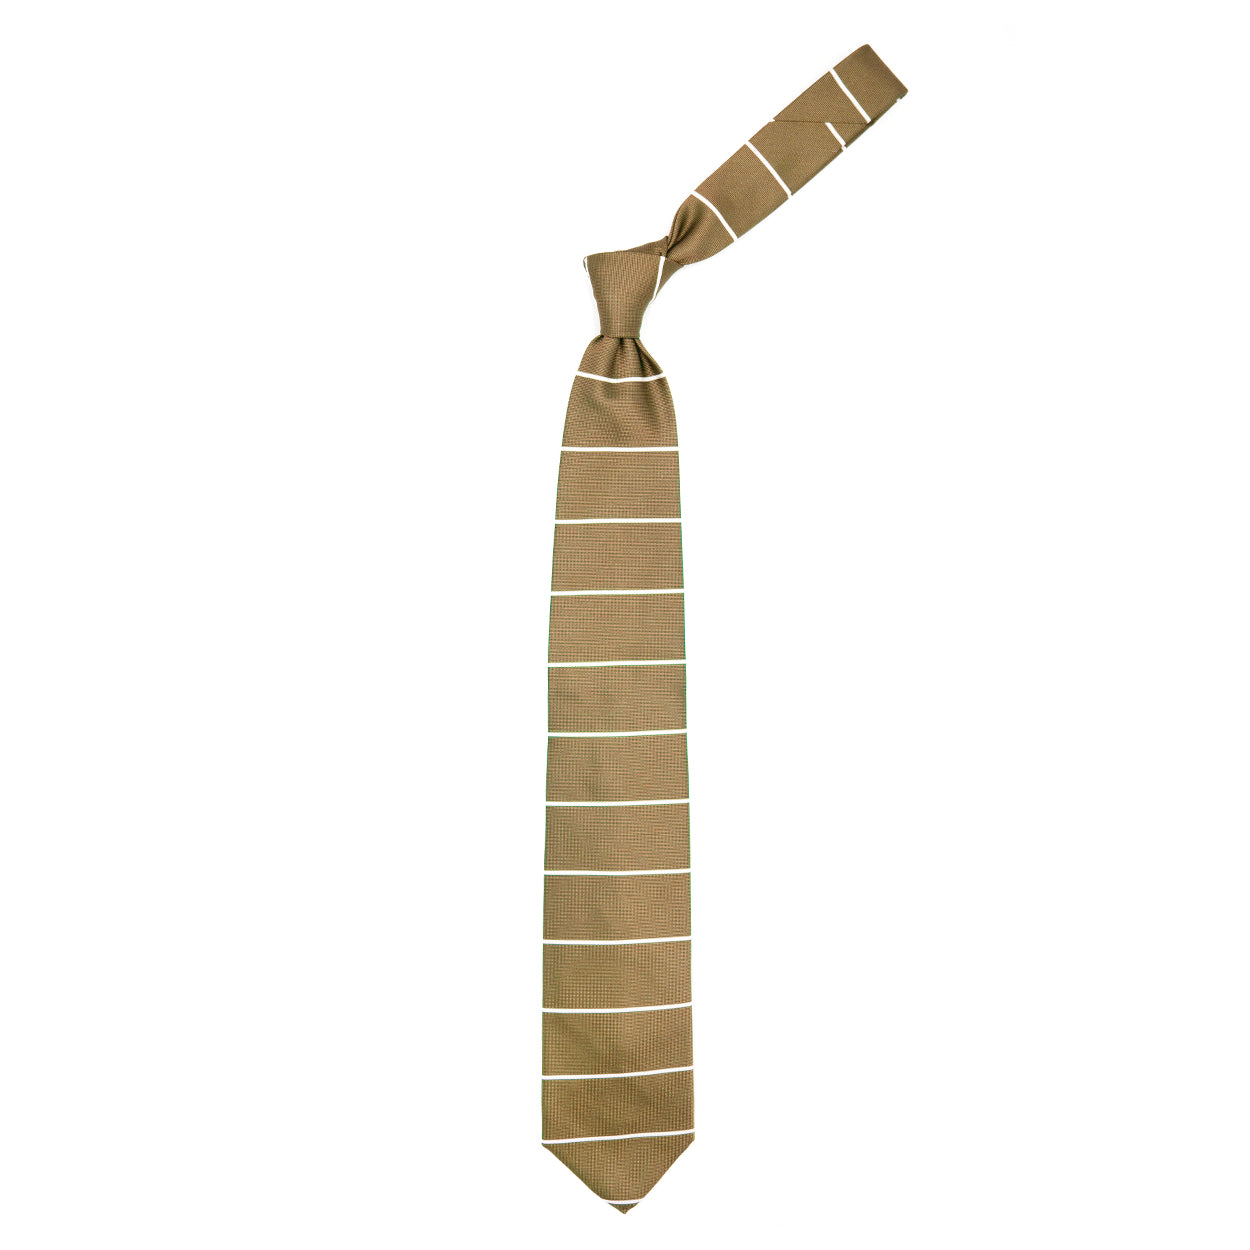 Beige tie with white stripes